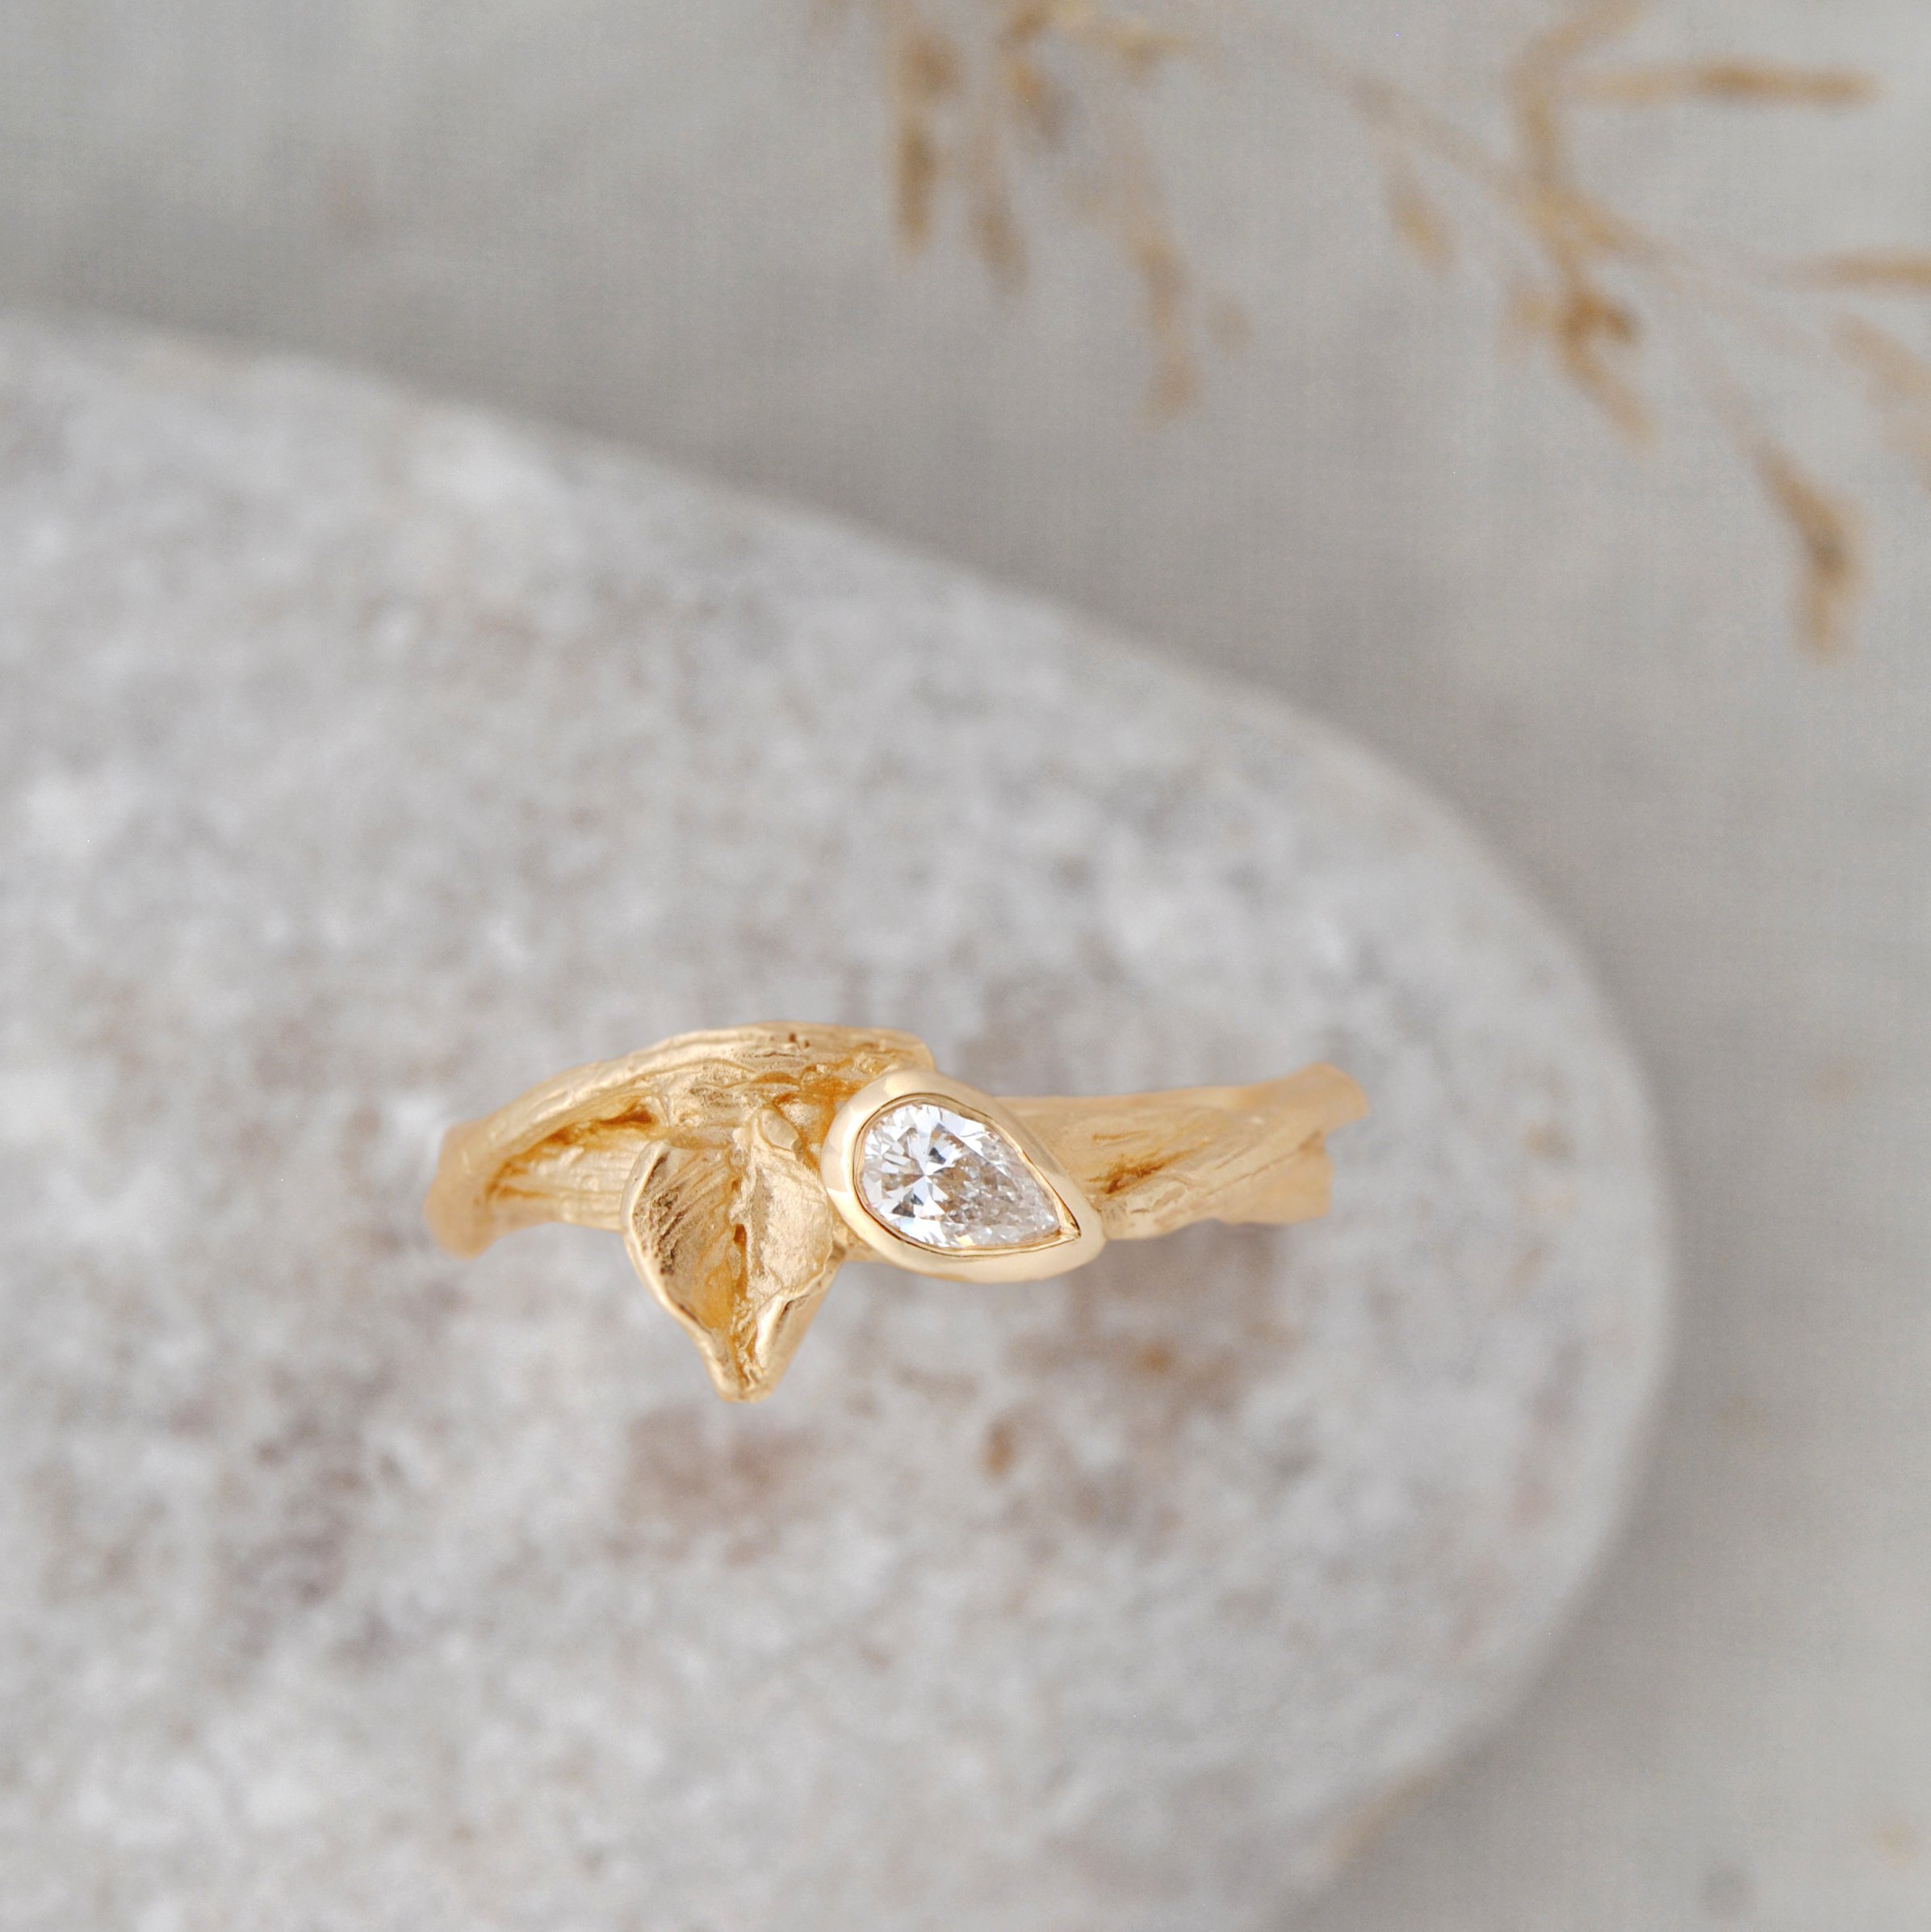 Birch-leaf-entwined-teardrop-diamond-engagement-ring-gold.jpg